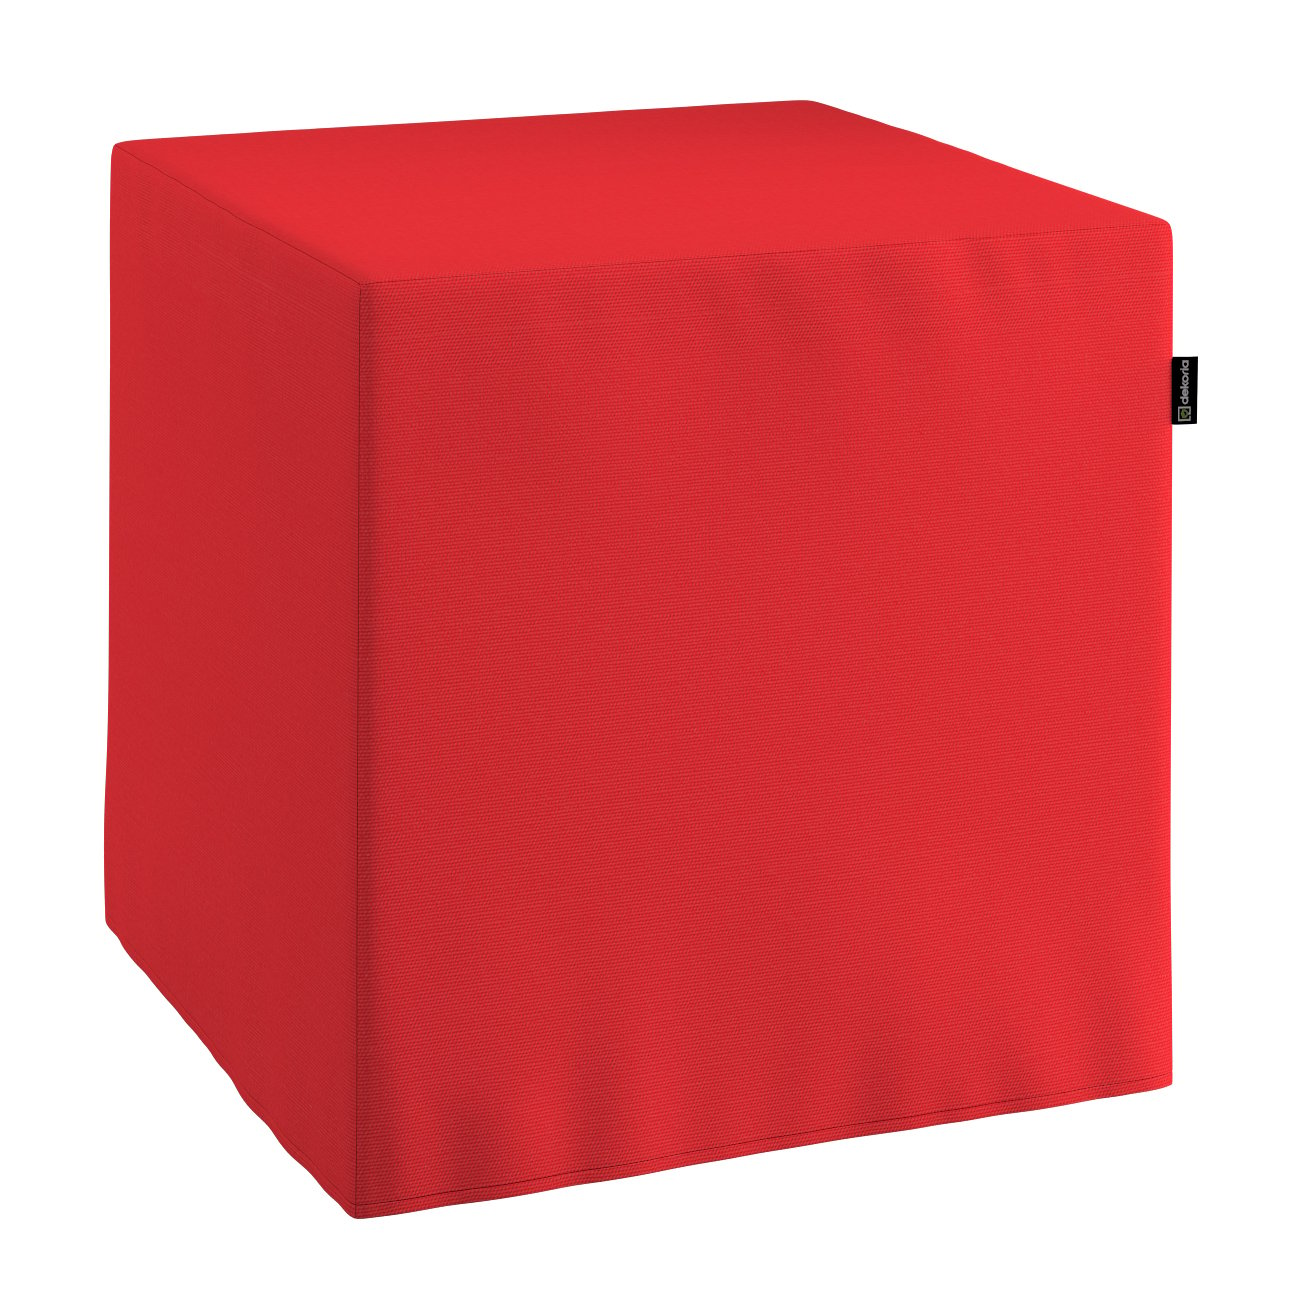 E-shop Dekoria Taburetka tvrdá, kocka, červená, 40 x 40 x 40 cm, Loneta, 133-43